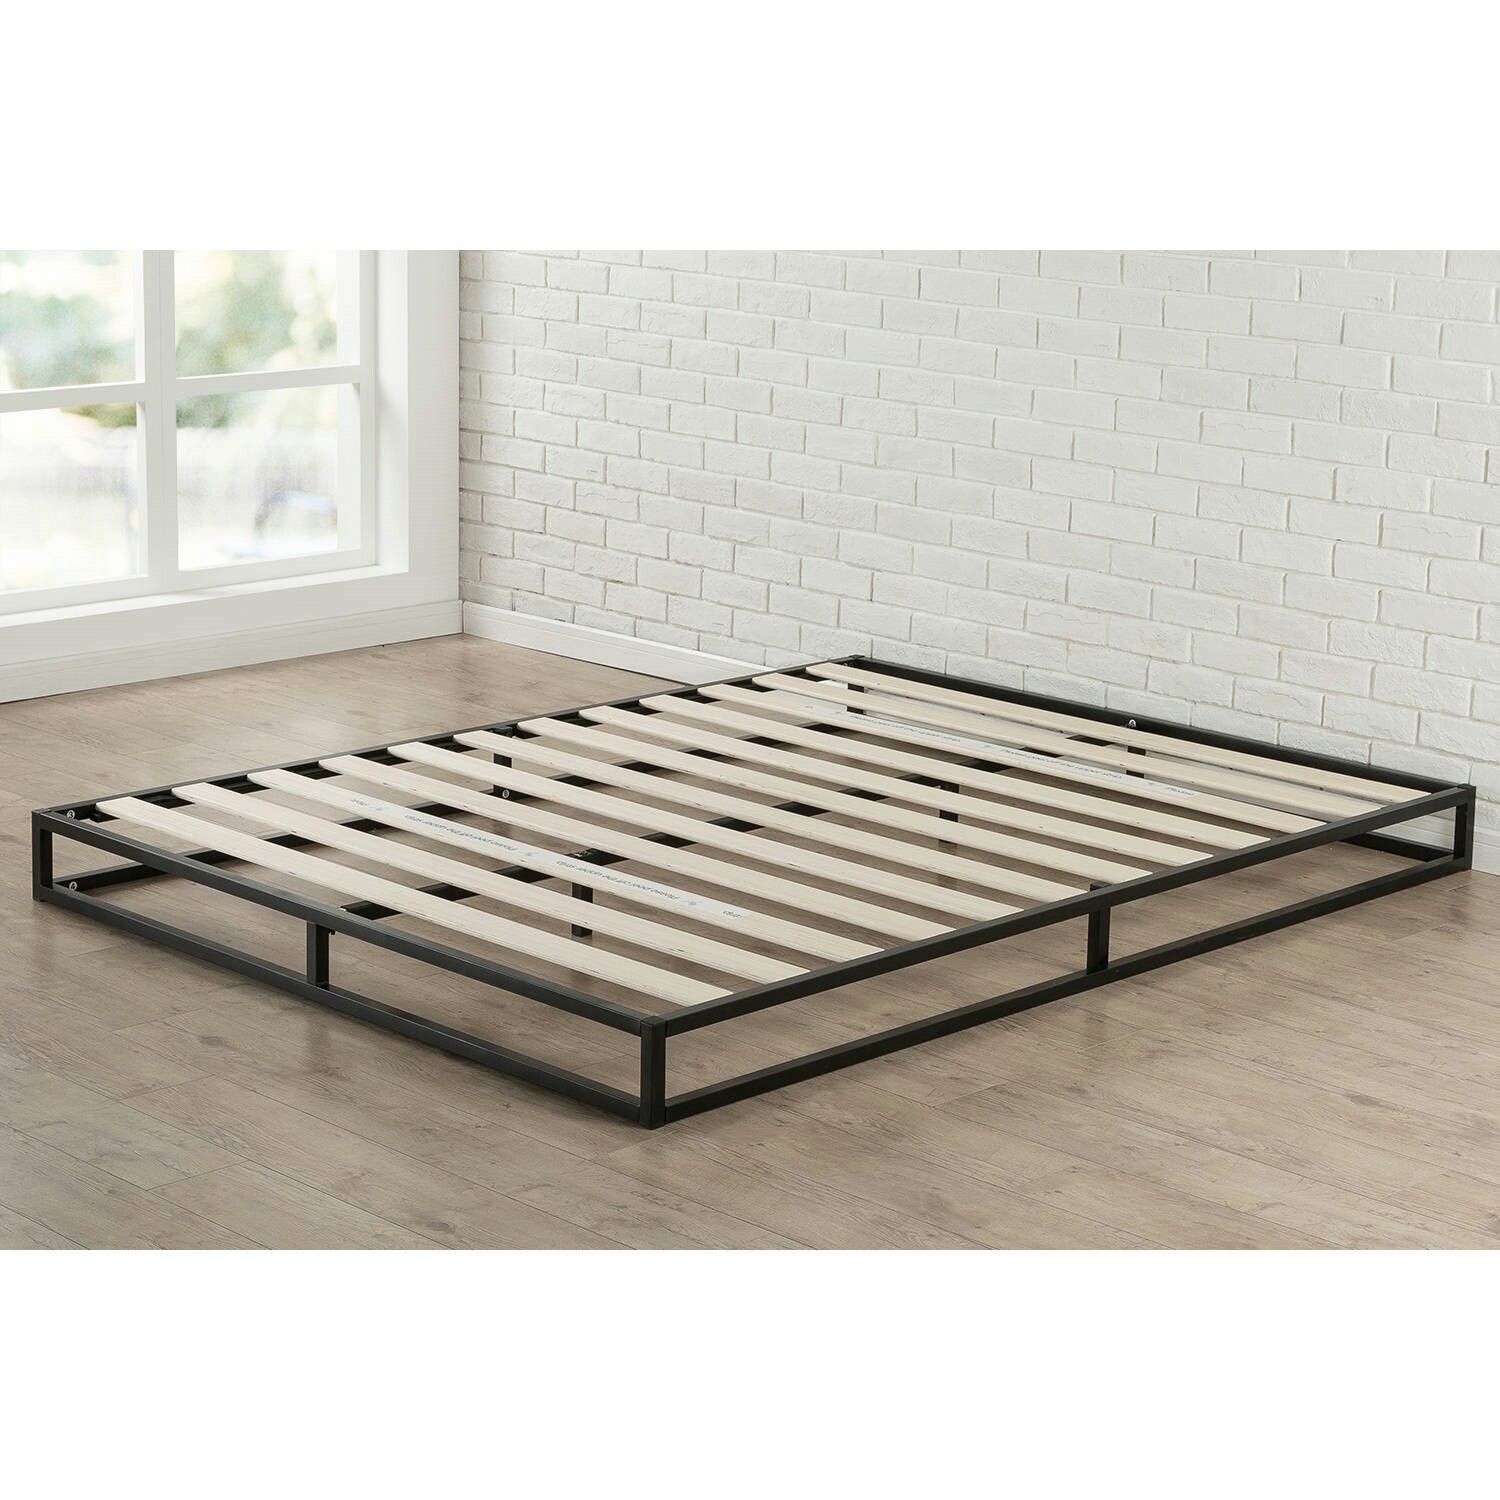 Zinus Joseph Modern Studio 6" Platforma Low Profile Bed Frame [King Size] [Open Box] [Item 3164]